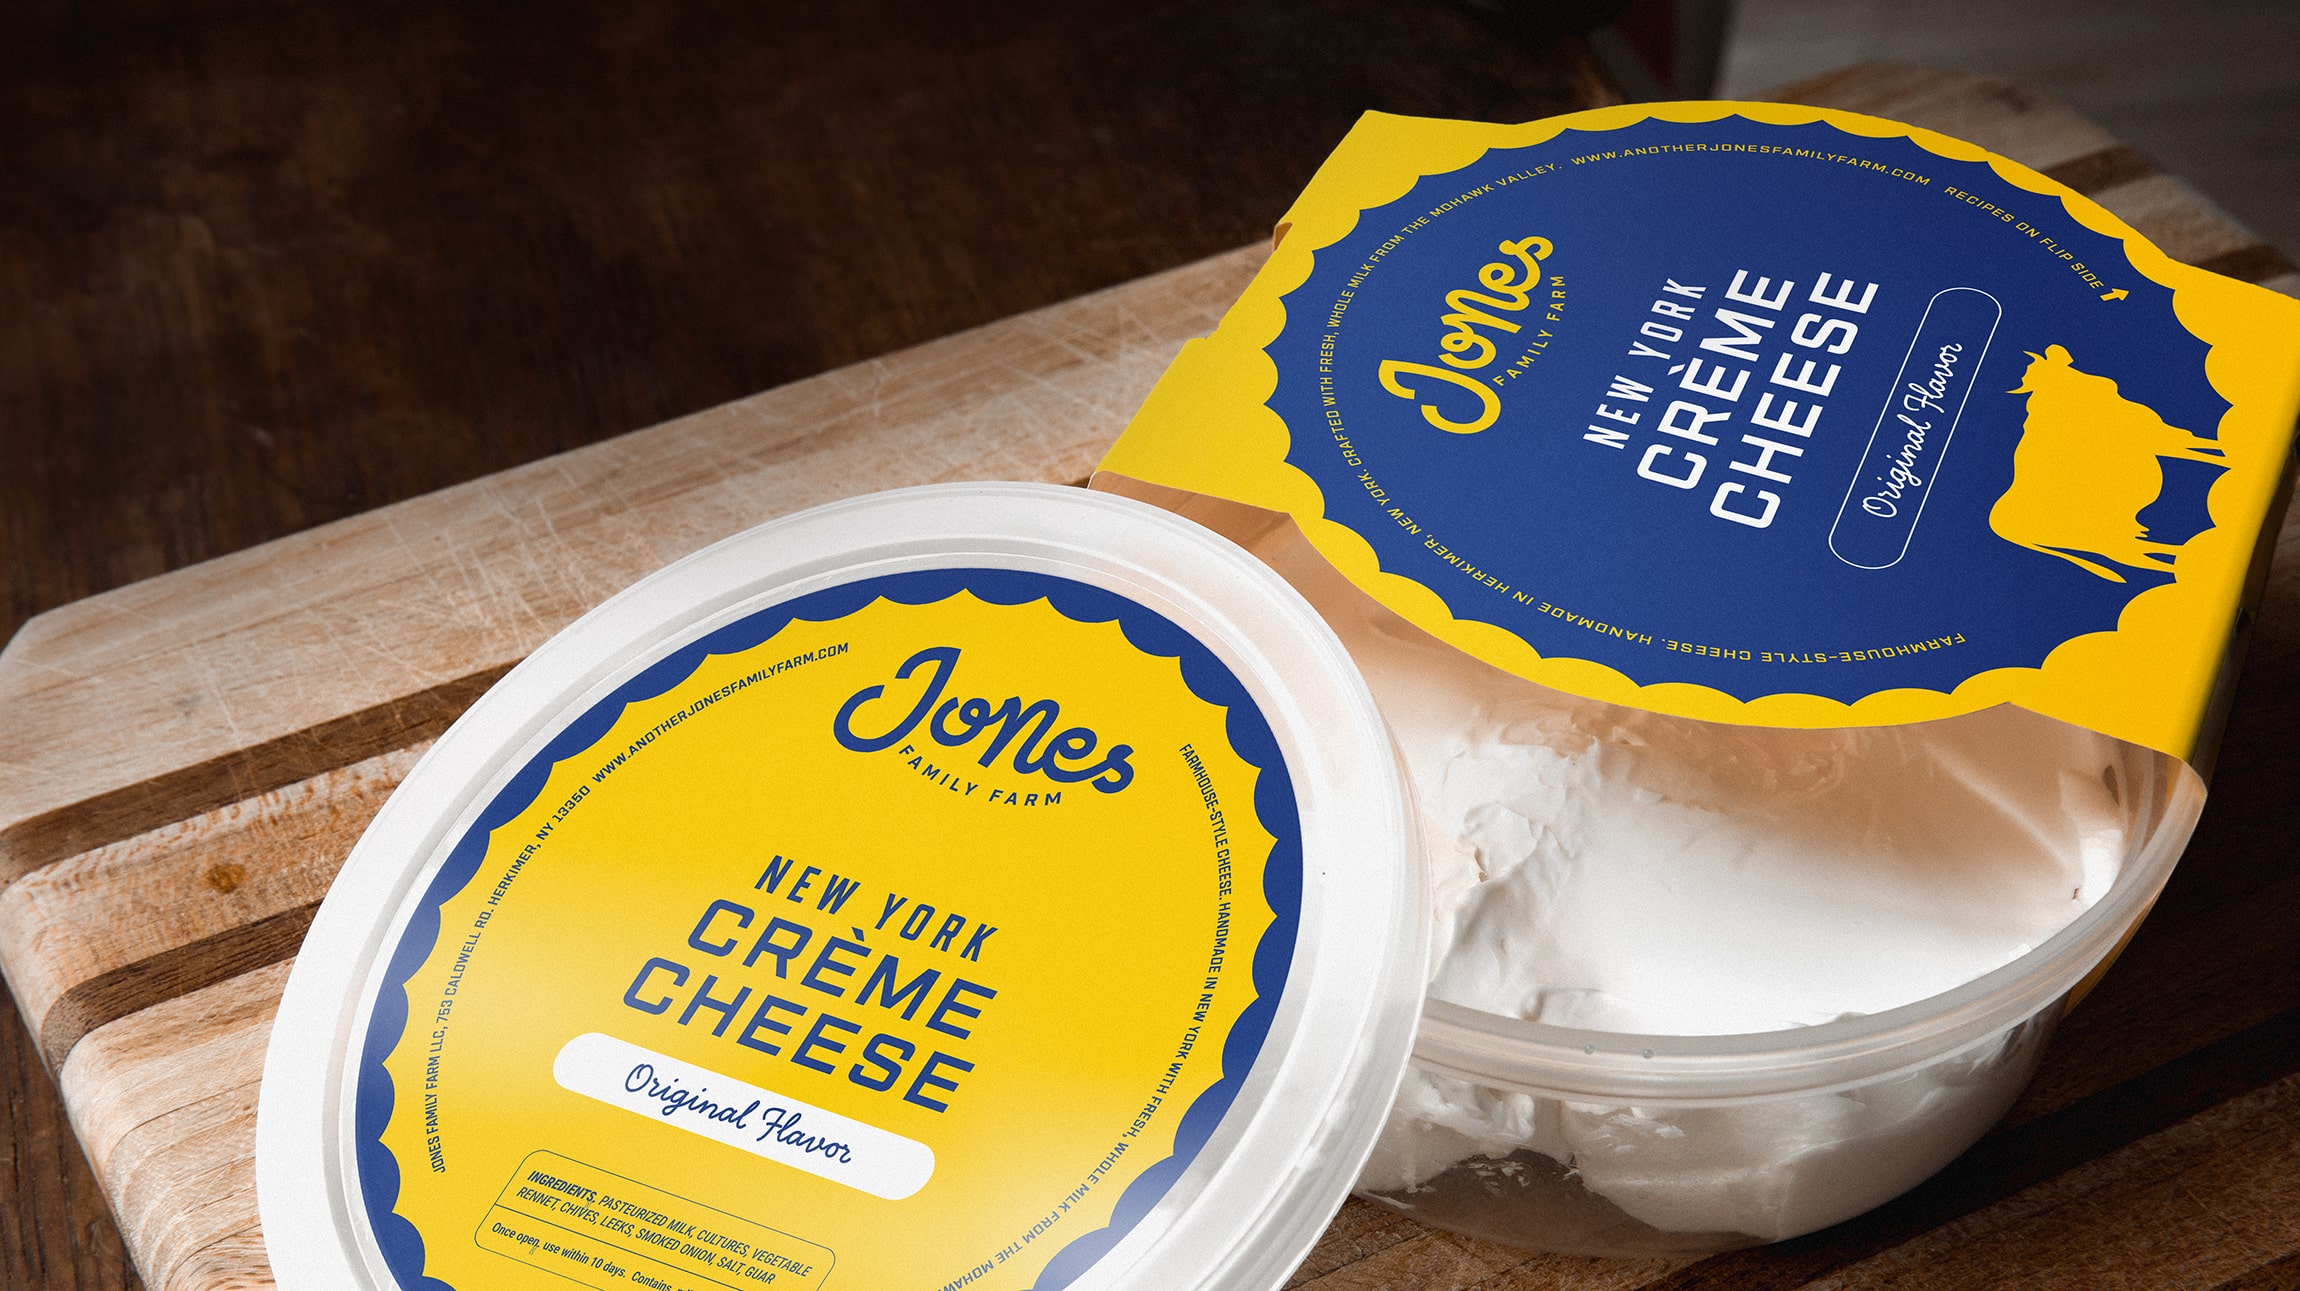 New York Crème Cheese